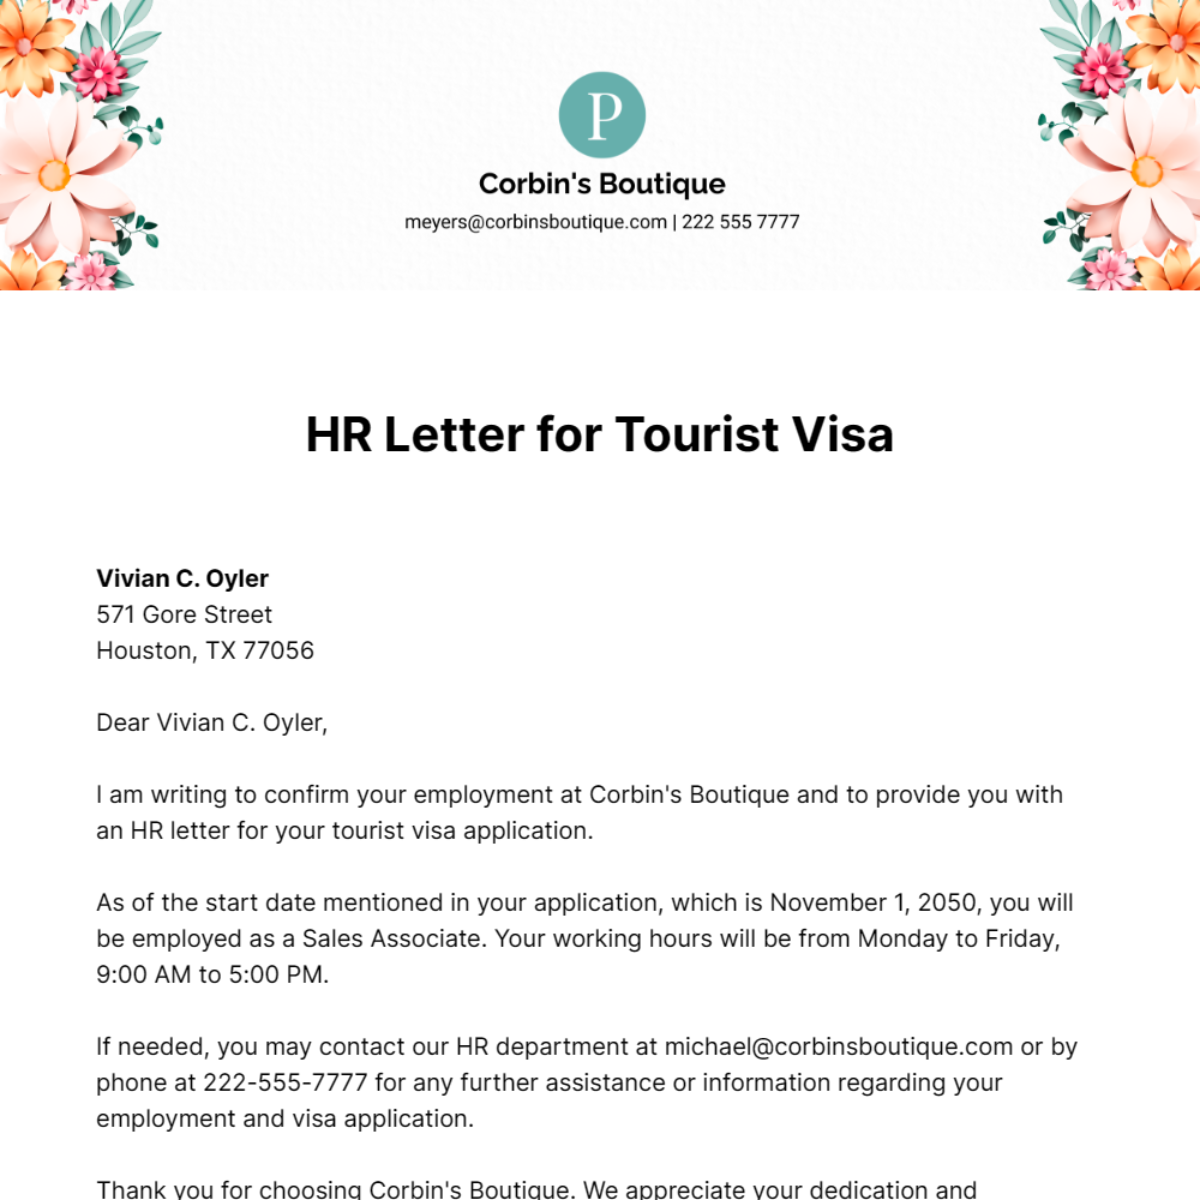 HR Letter for Tourist Visa Template